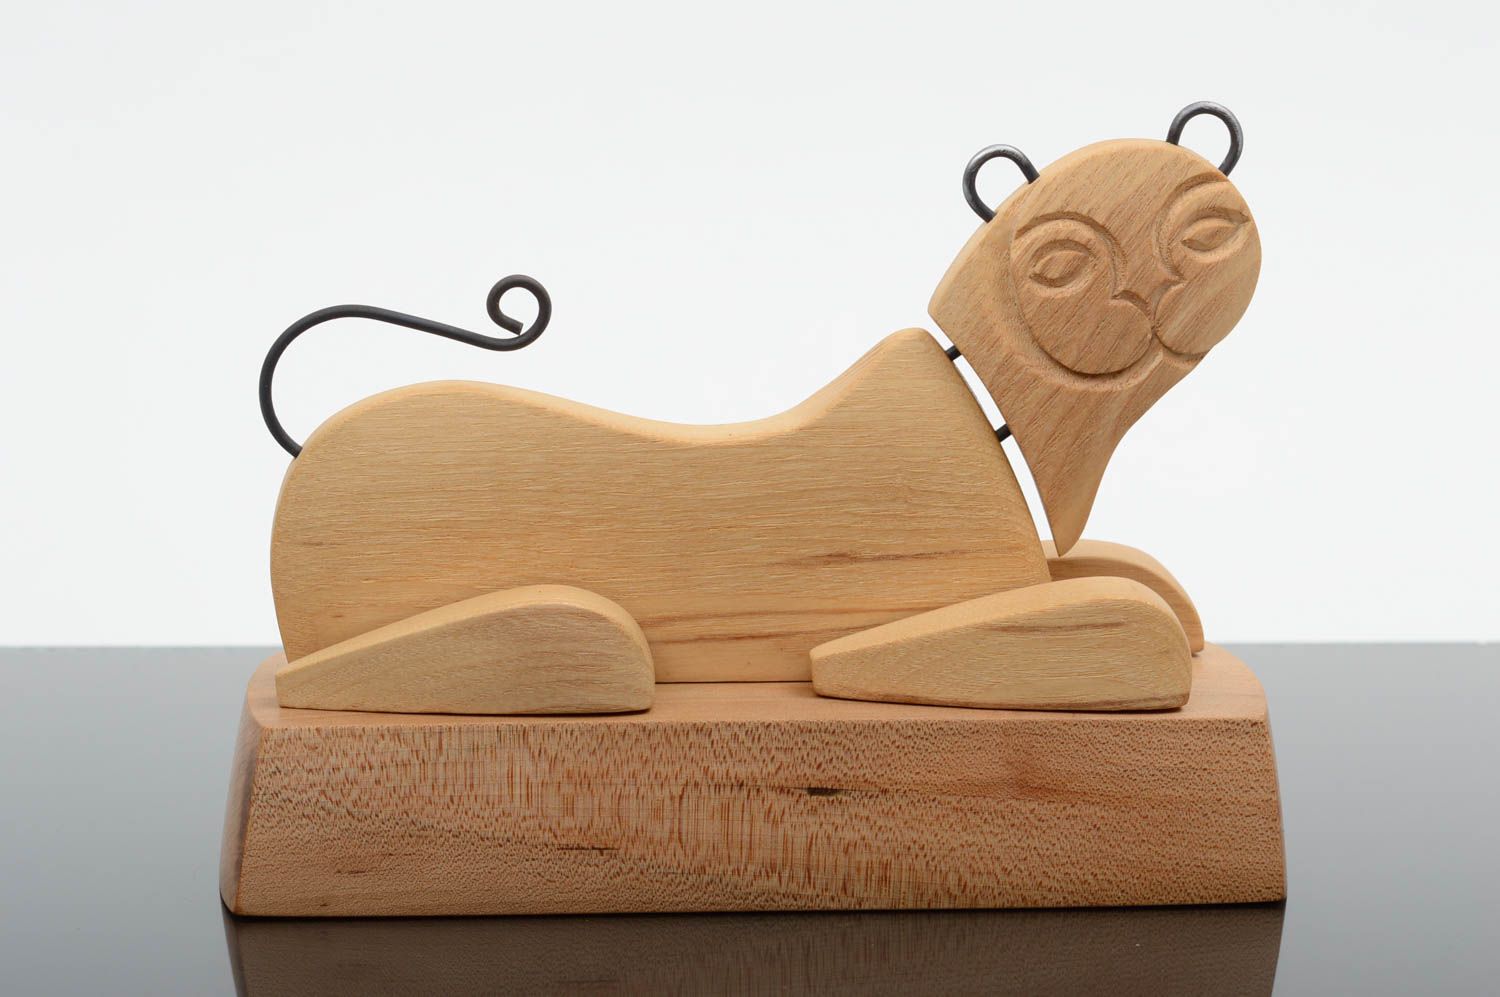 Handmade wood sculpture wooden gifts animal figurines souvenir ideas home decor photo 1